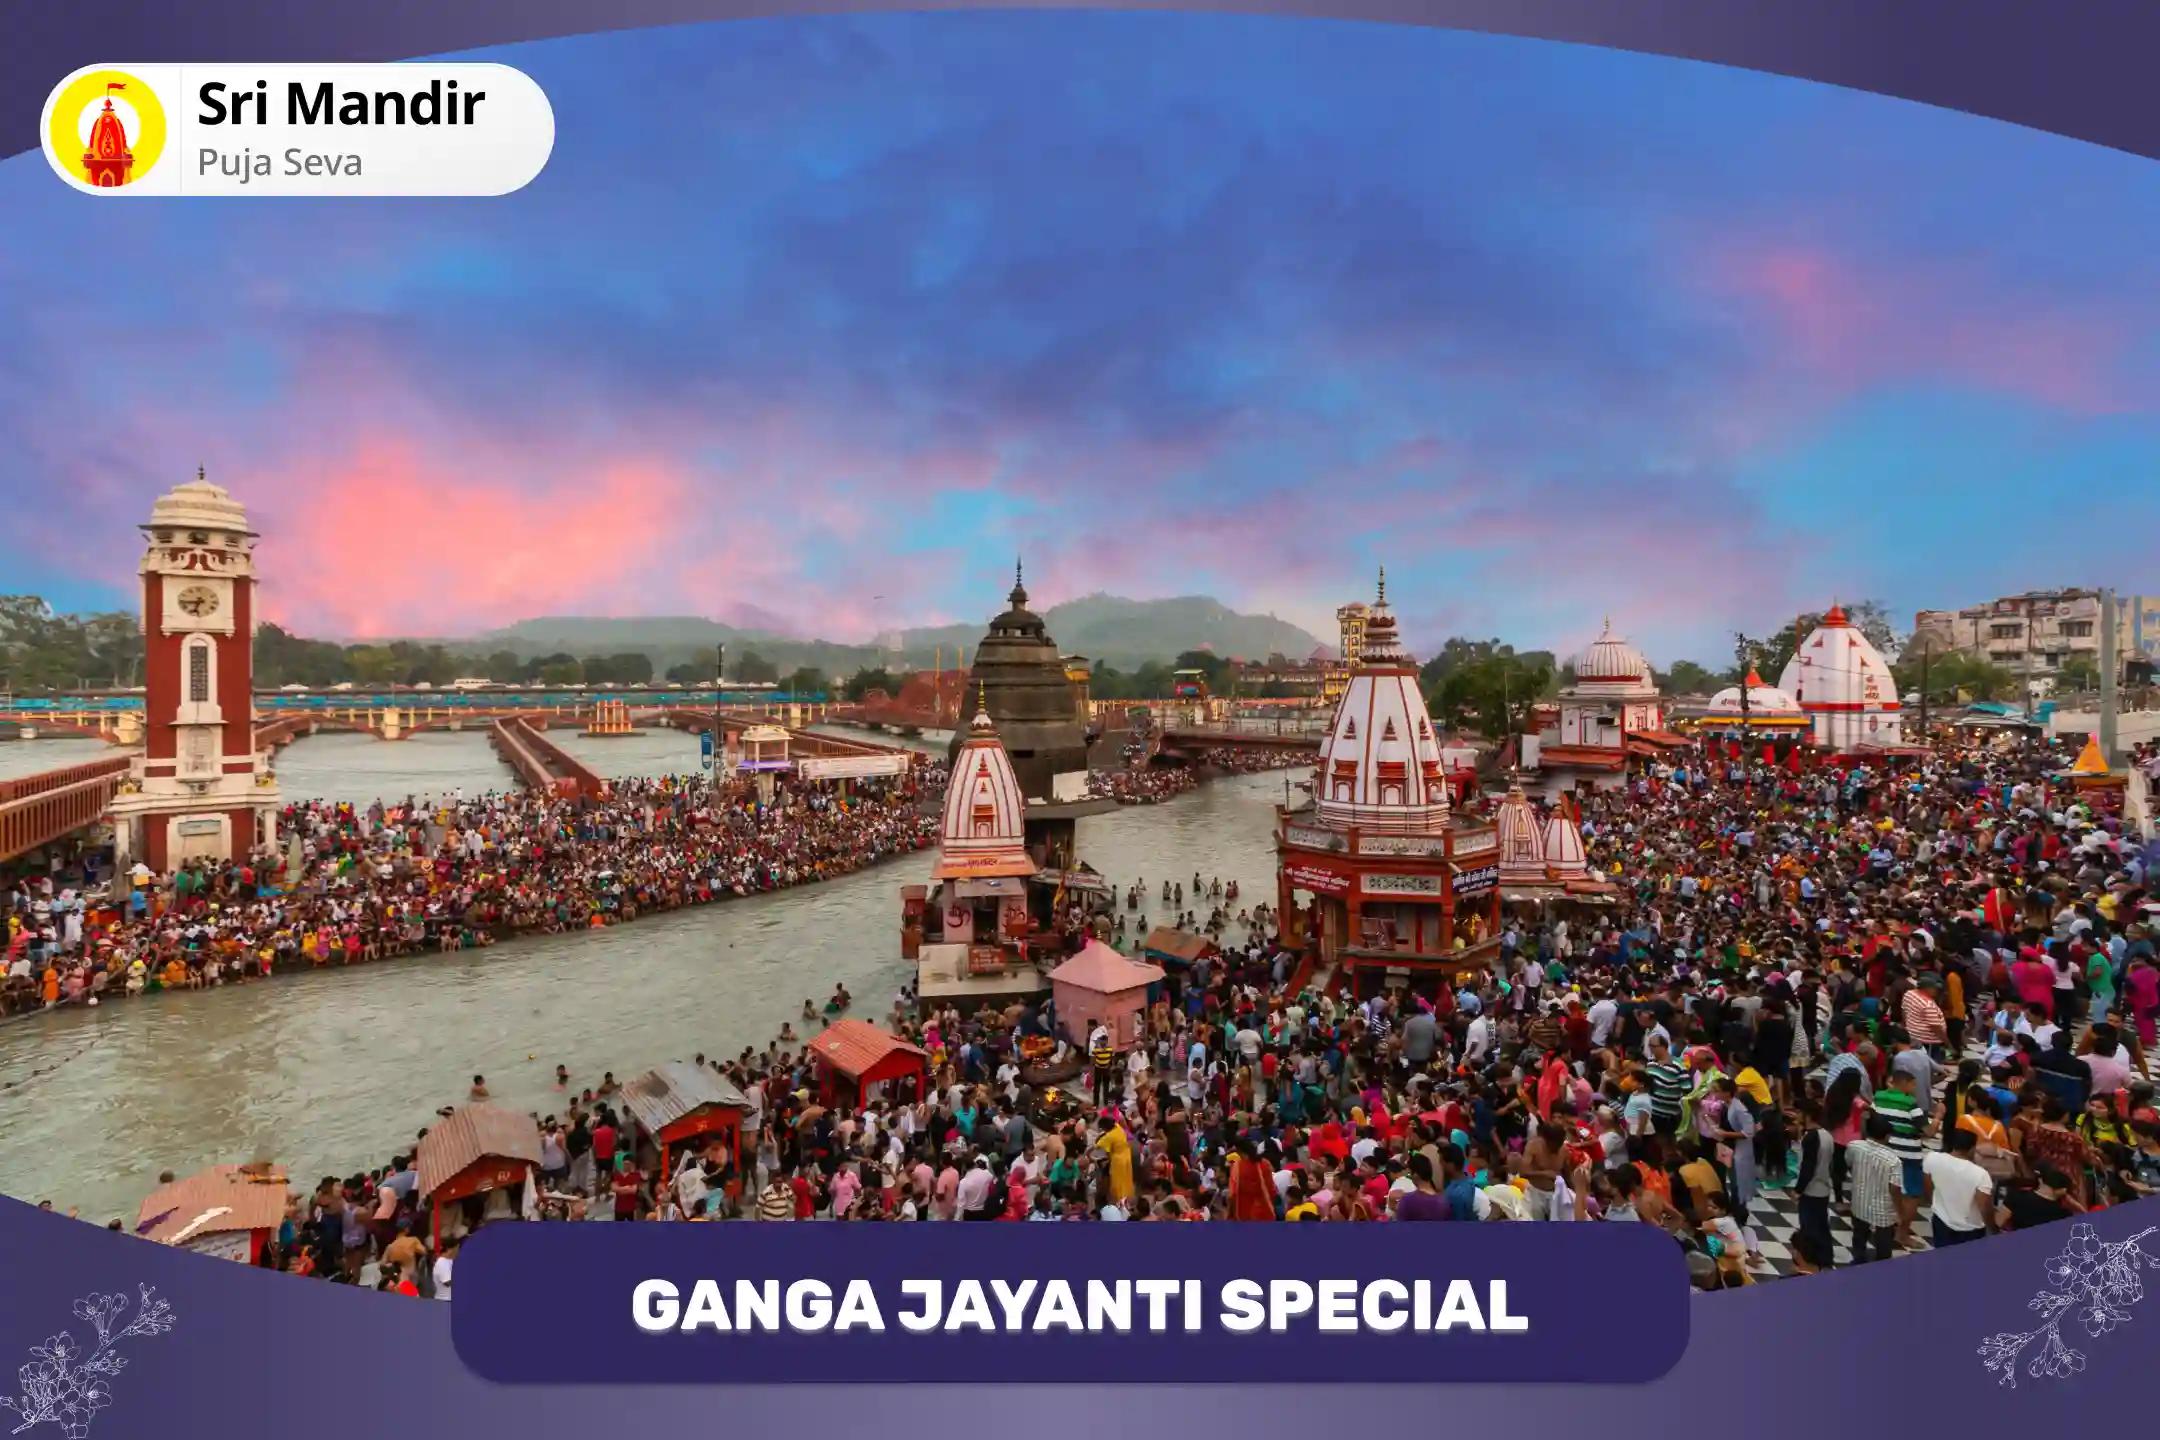 Ganga Jayanti Special Maa Ganga Dudh Abhishek, 1008 Ganga Stotra Path and Haridwar Deep Daan for Good Health and Protection from Negative Energies